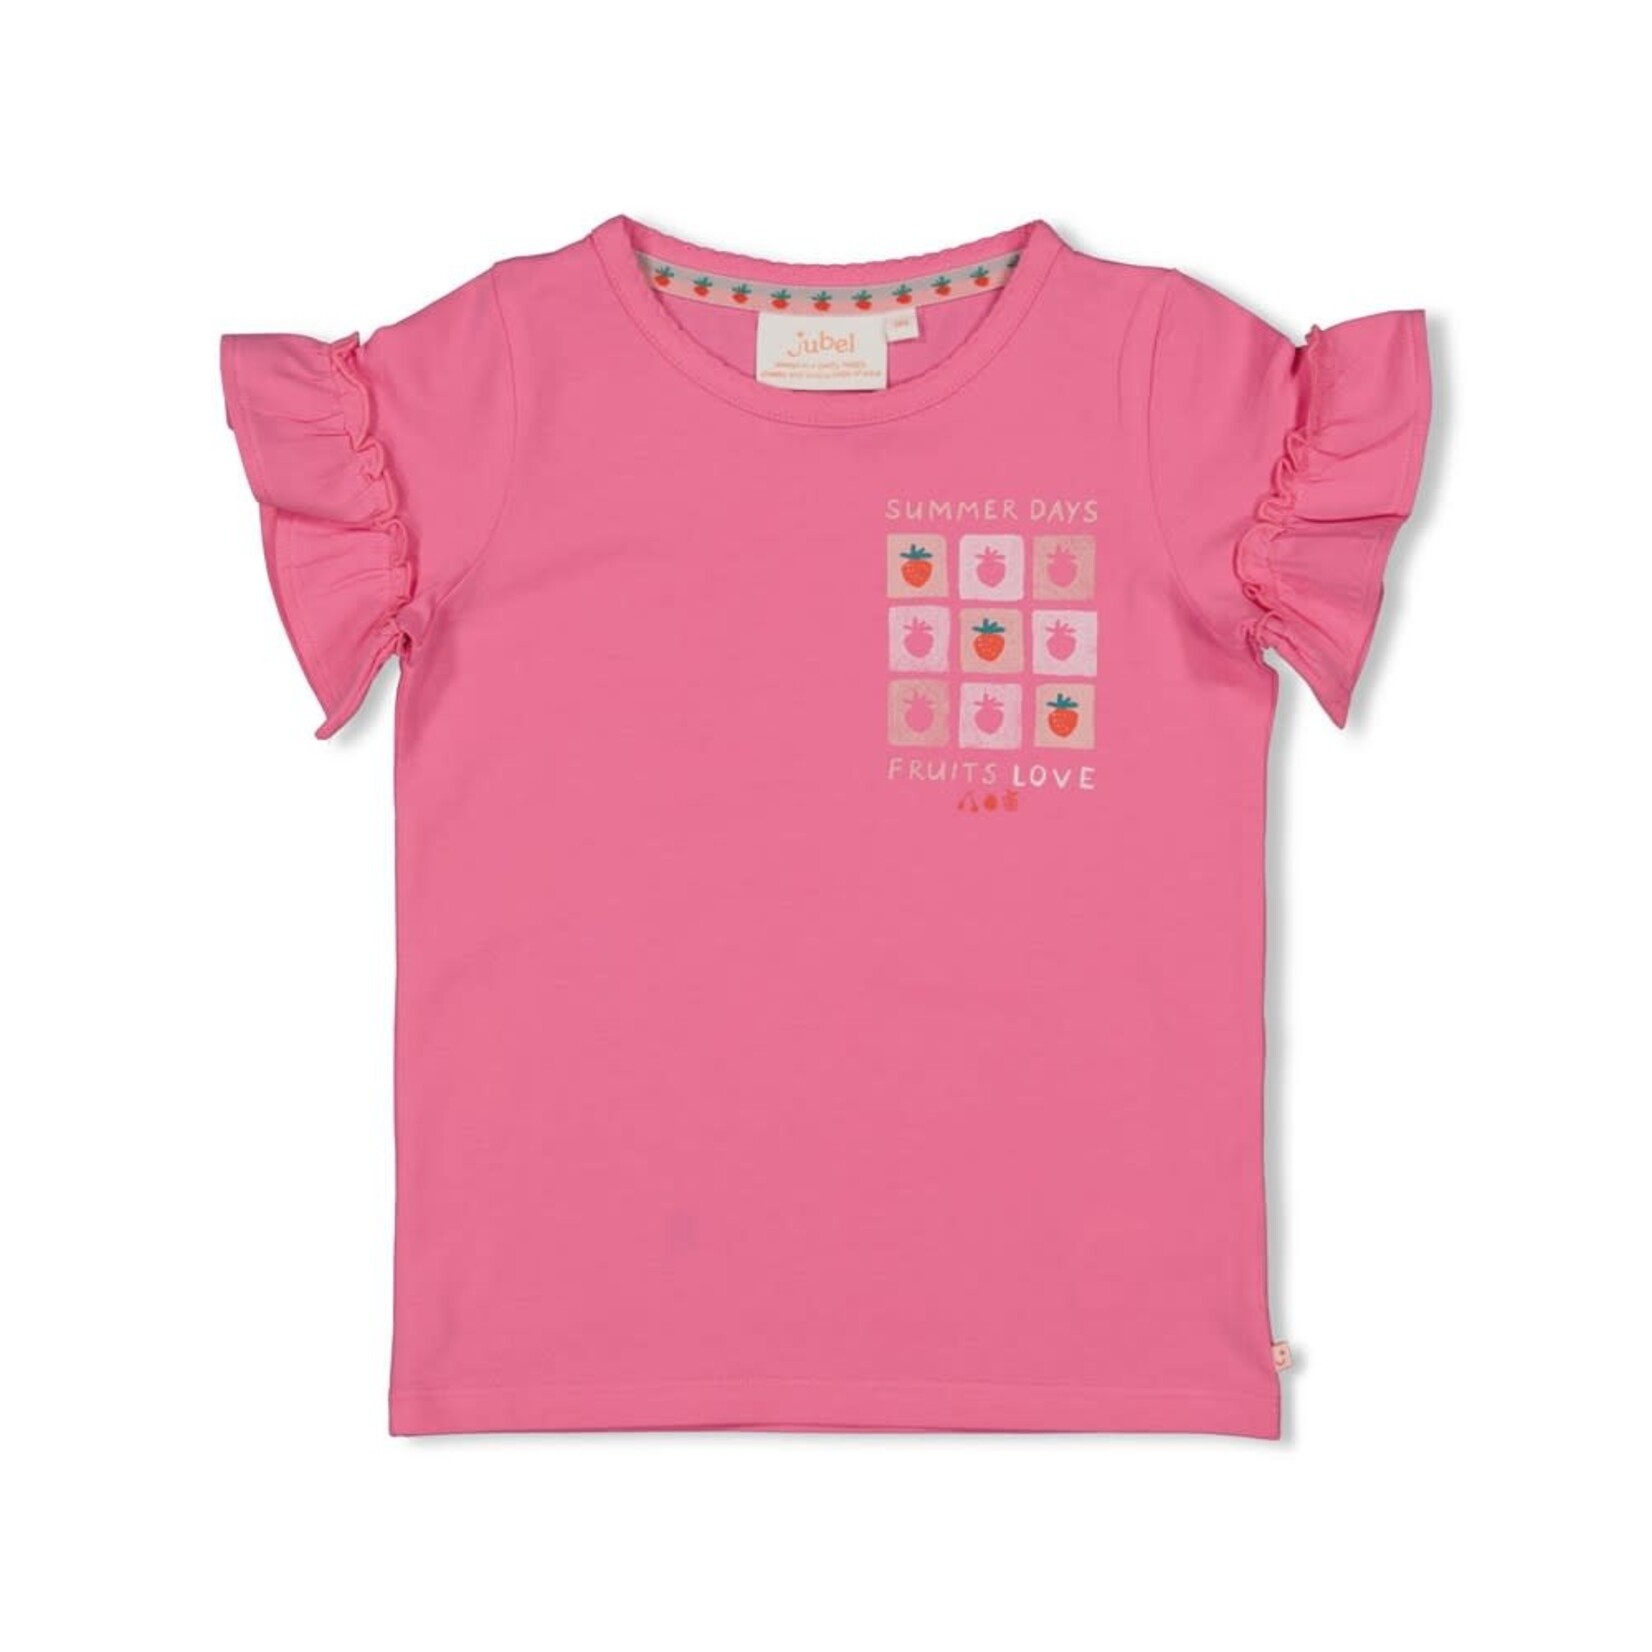 Jubel T-shirt - Berry Nice roze